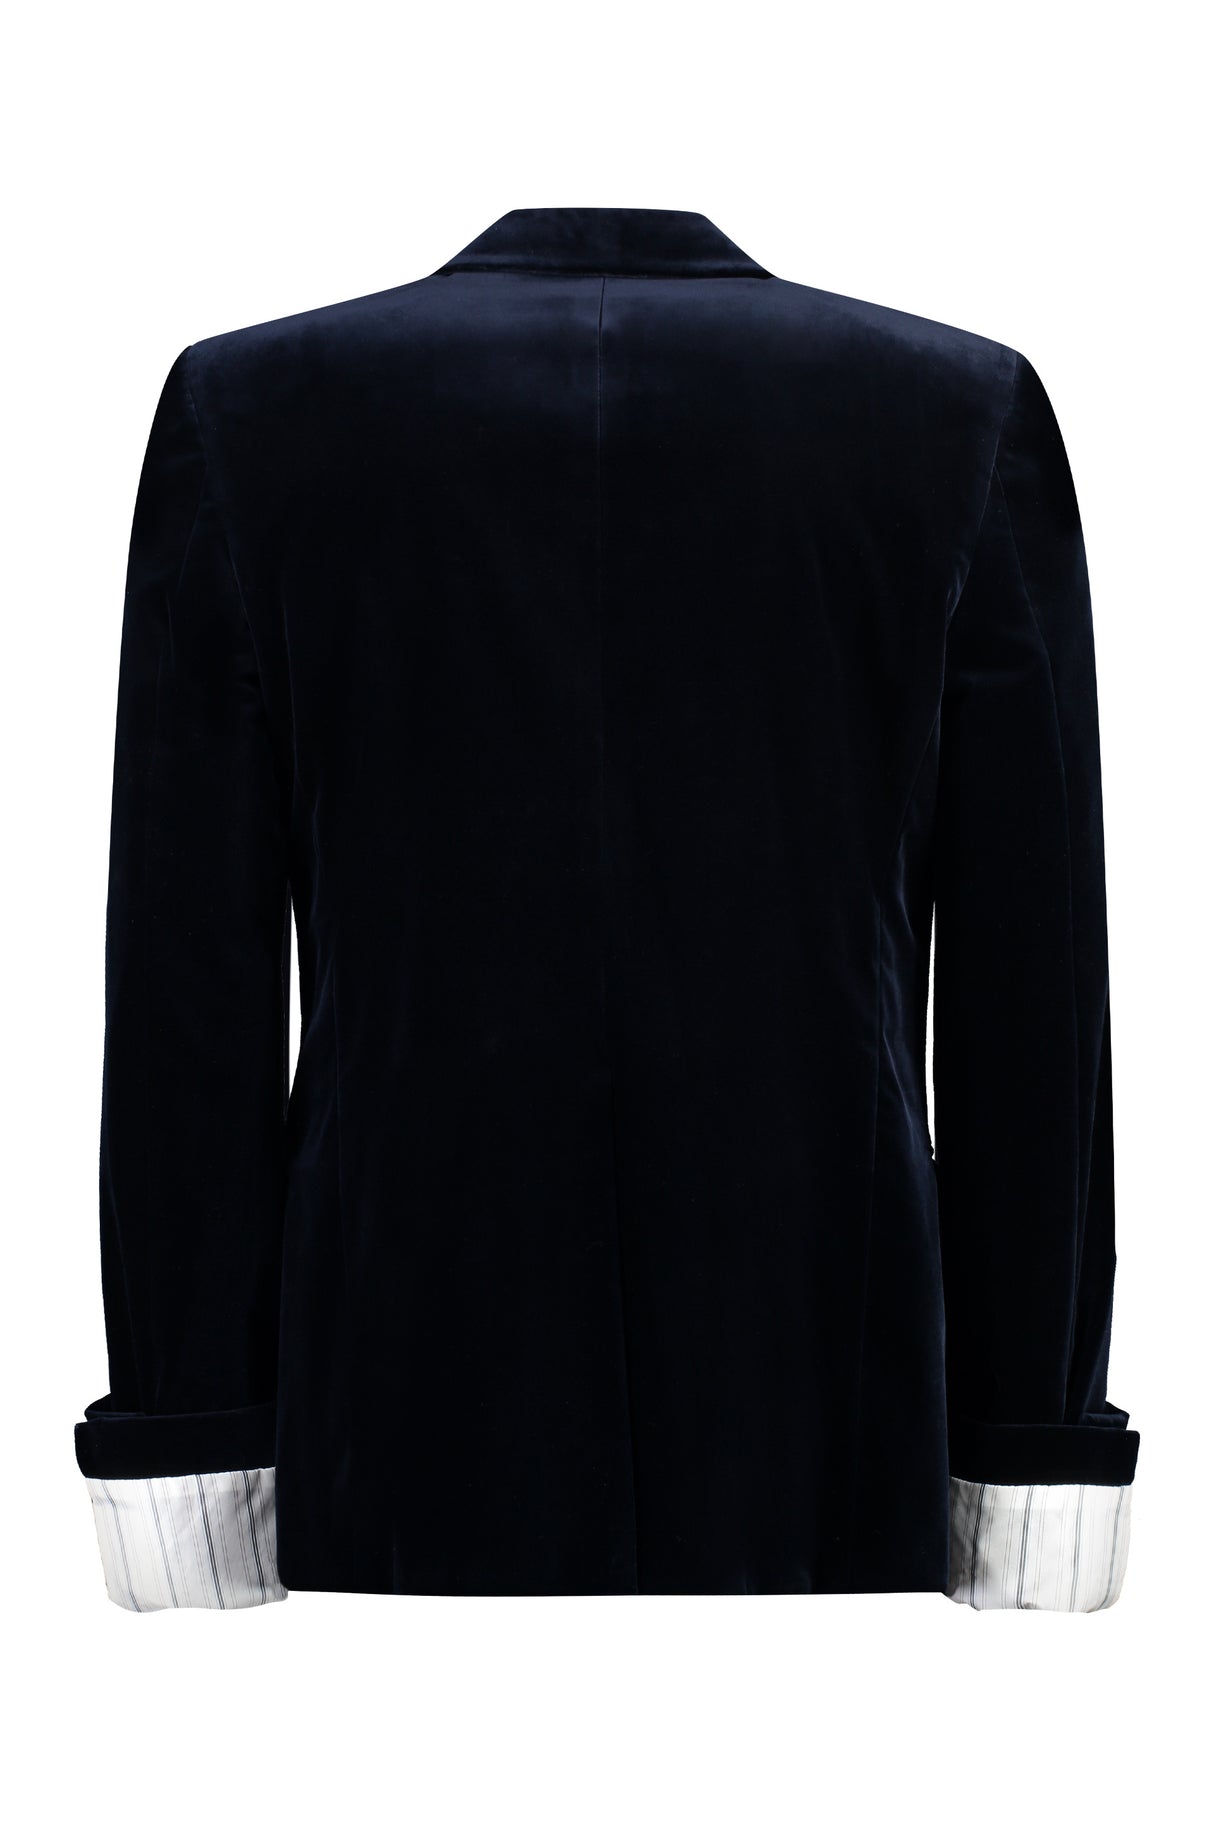 GUCCI Blue Single-Breasted Velvet Jacket for Men